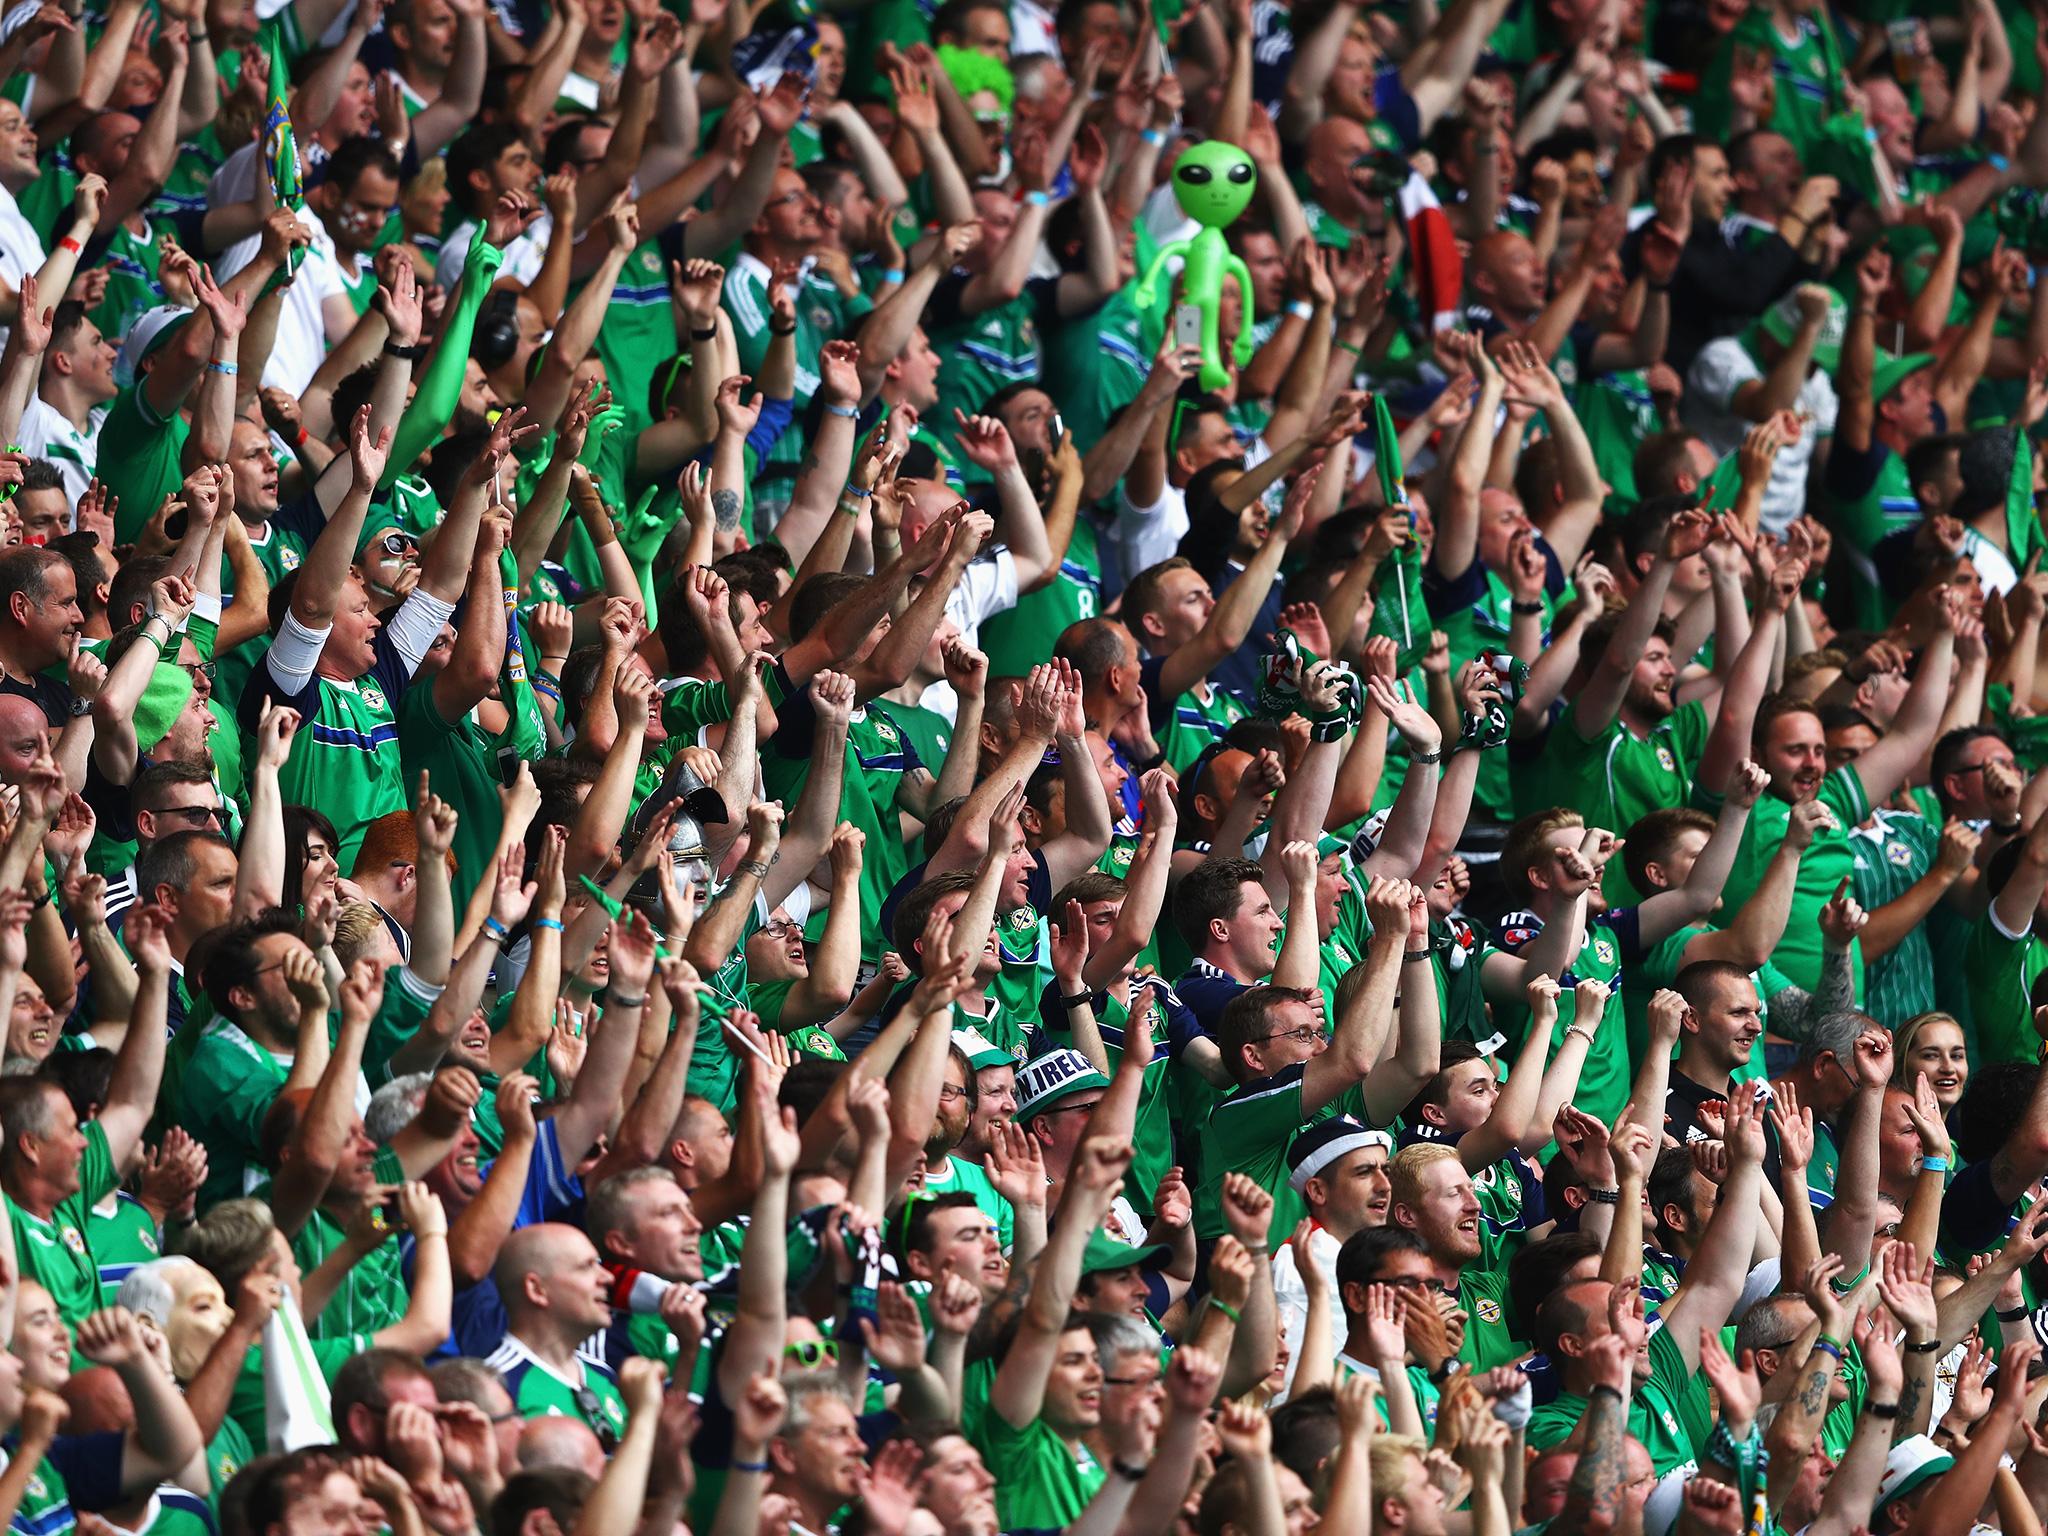 Northern Ireland's fans were in fine voice at the Parc des Princes